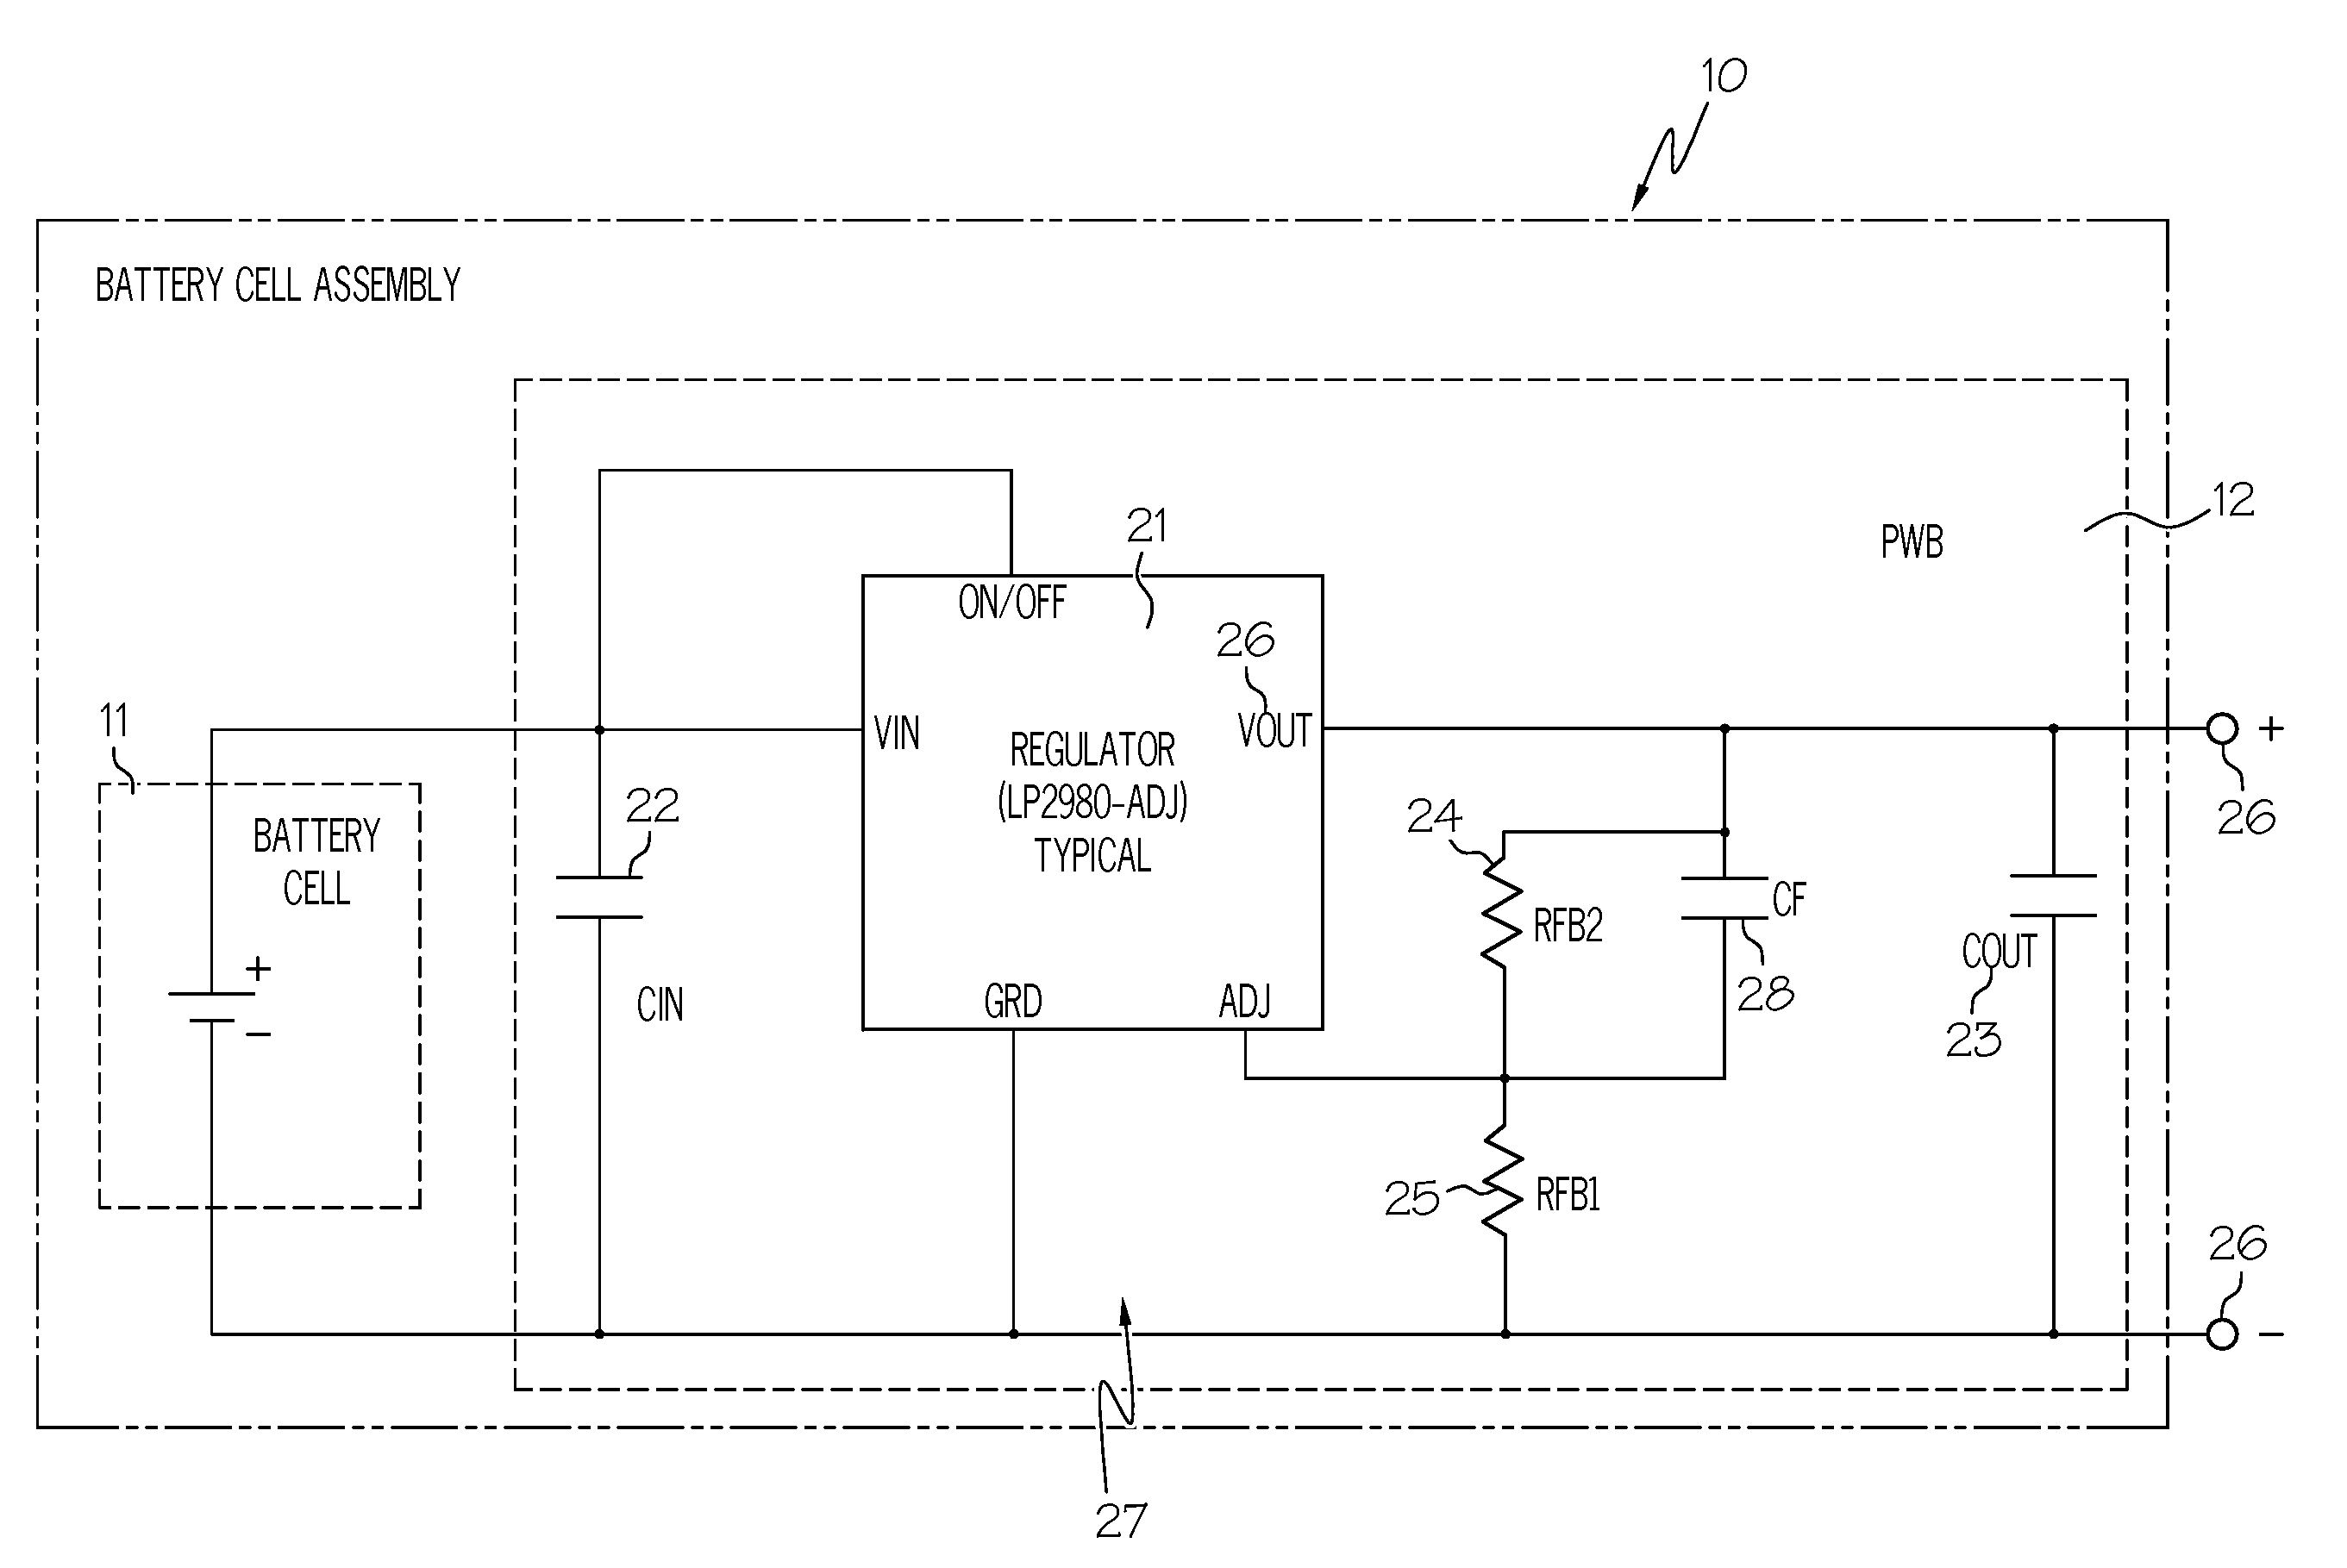 Primary battery with internal voltage regulator